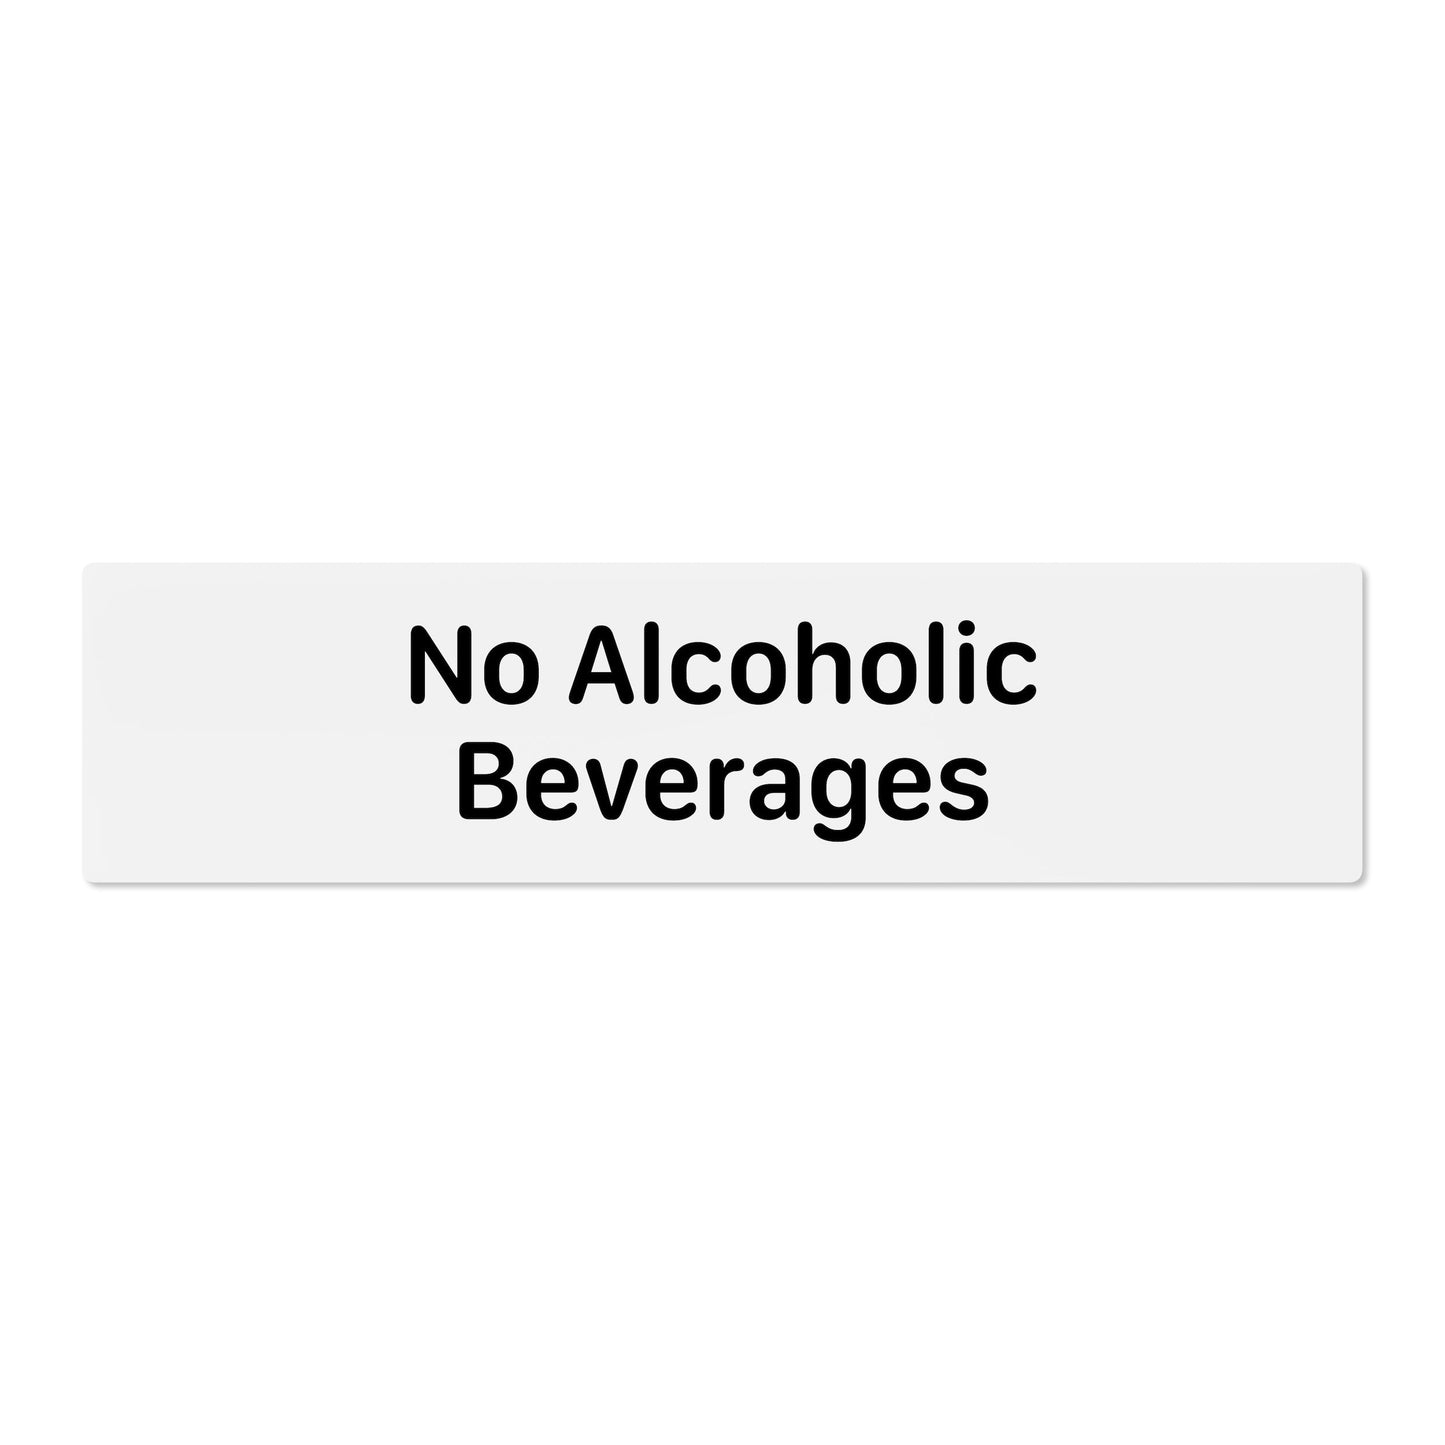 No Alcoholic Beverages